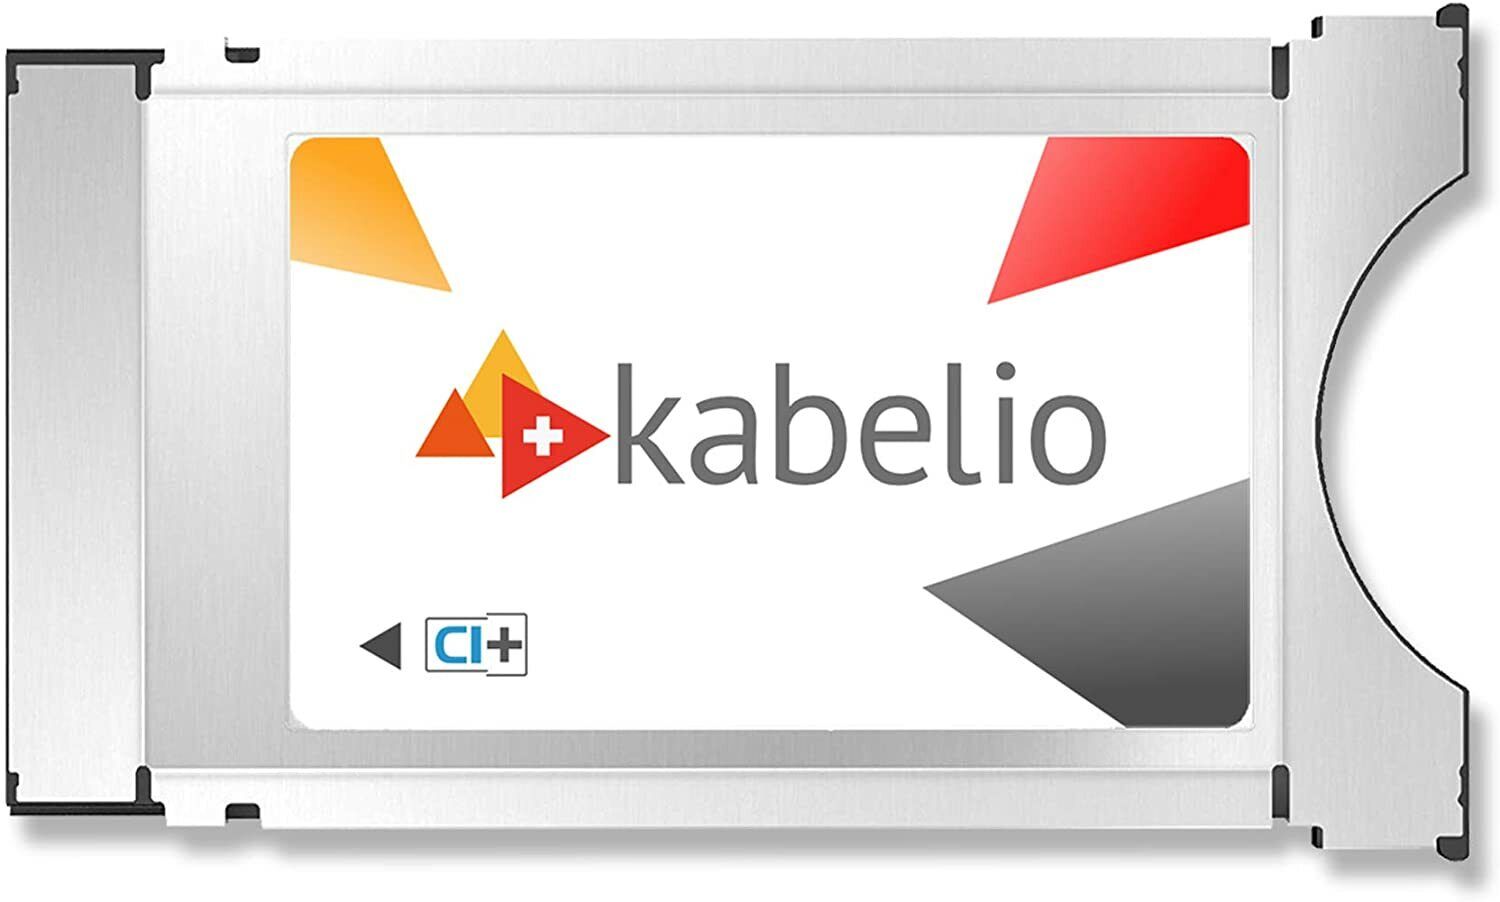 Kabelio CI+ Zugangsmodul inkl. 3 Monate Gratis-Zugang für SAT Swiss, Austria TV